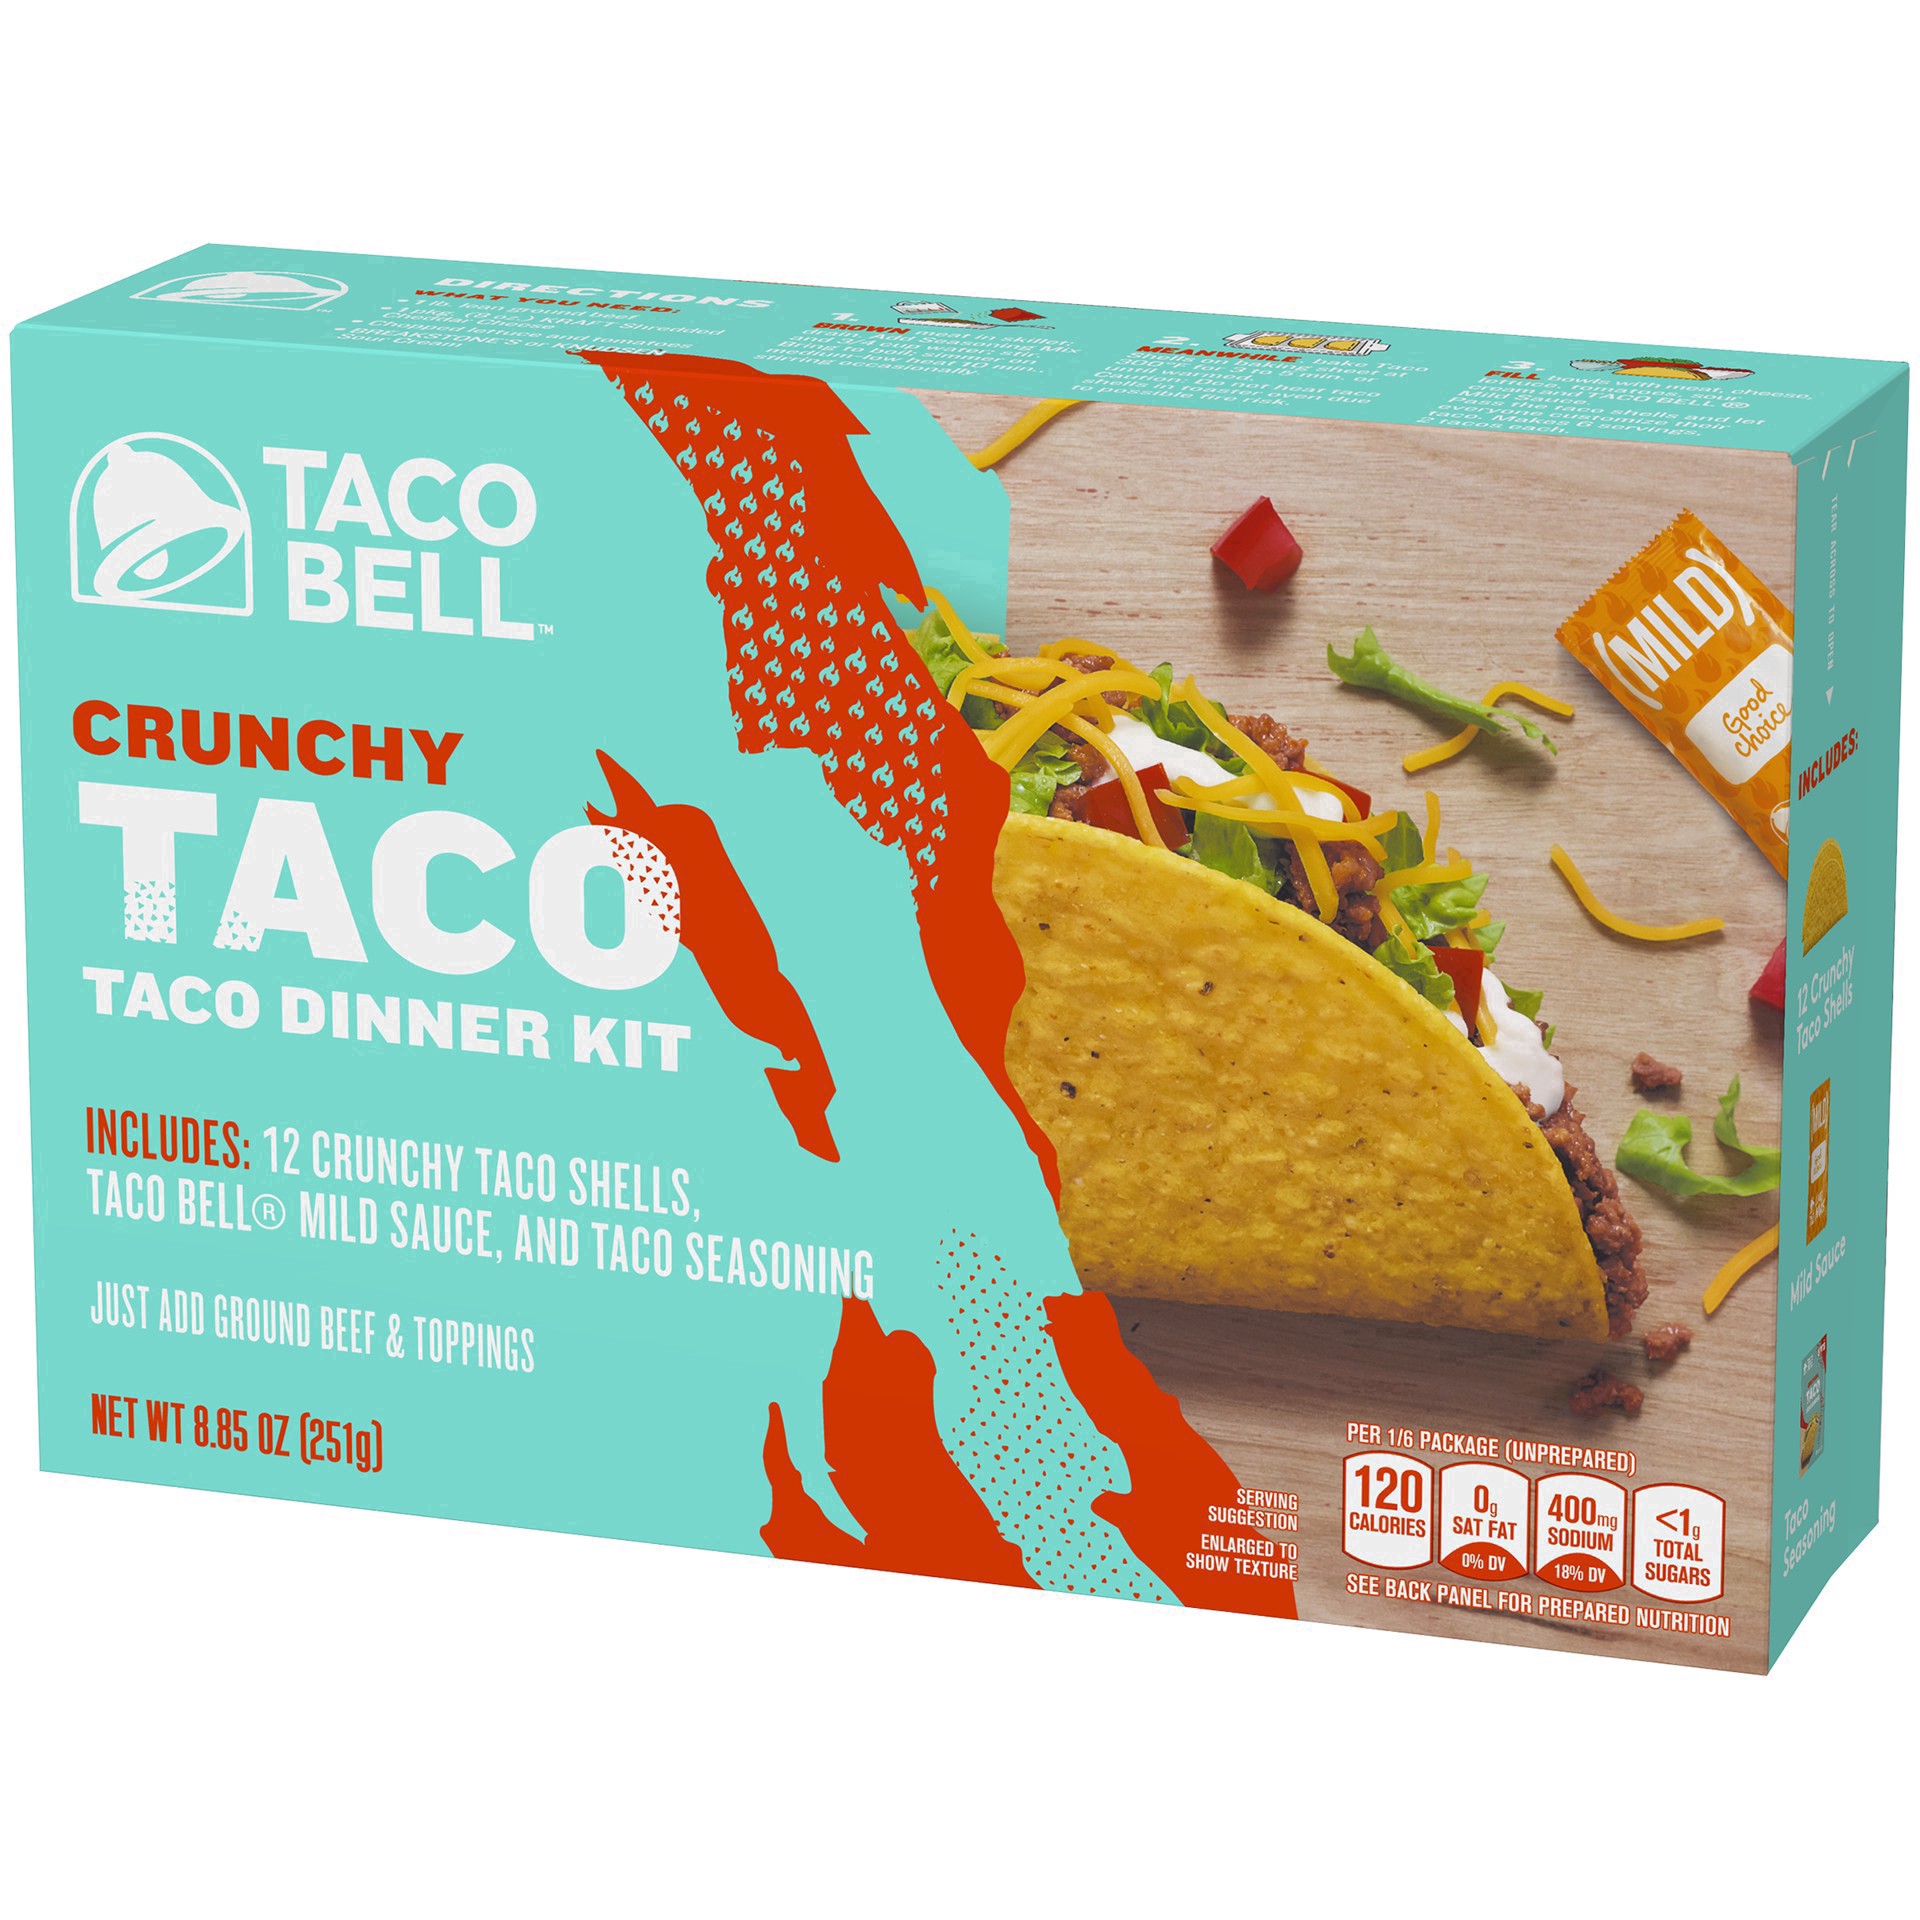 slide 27 of 91, Taco Bell Crunchy Taco Cravings Kit with 12 Crunchy Taco Shells, Taco Bell Mild Sauce & Seasoning, 8.85 oz Box, 1 ct